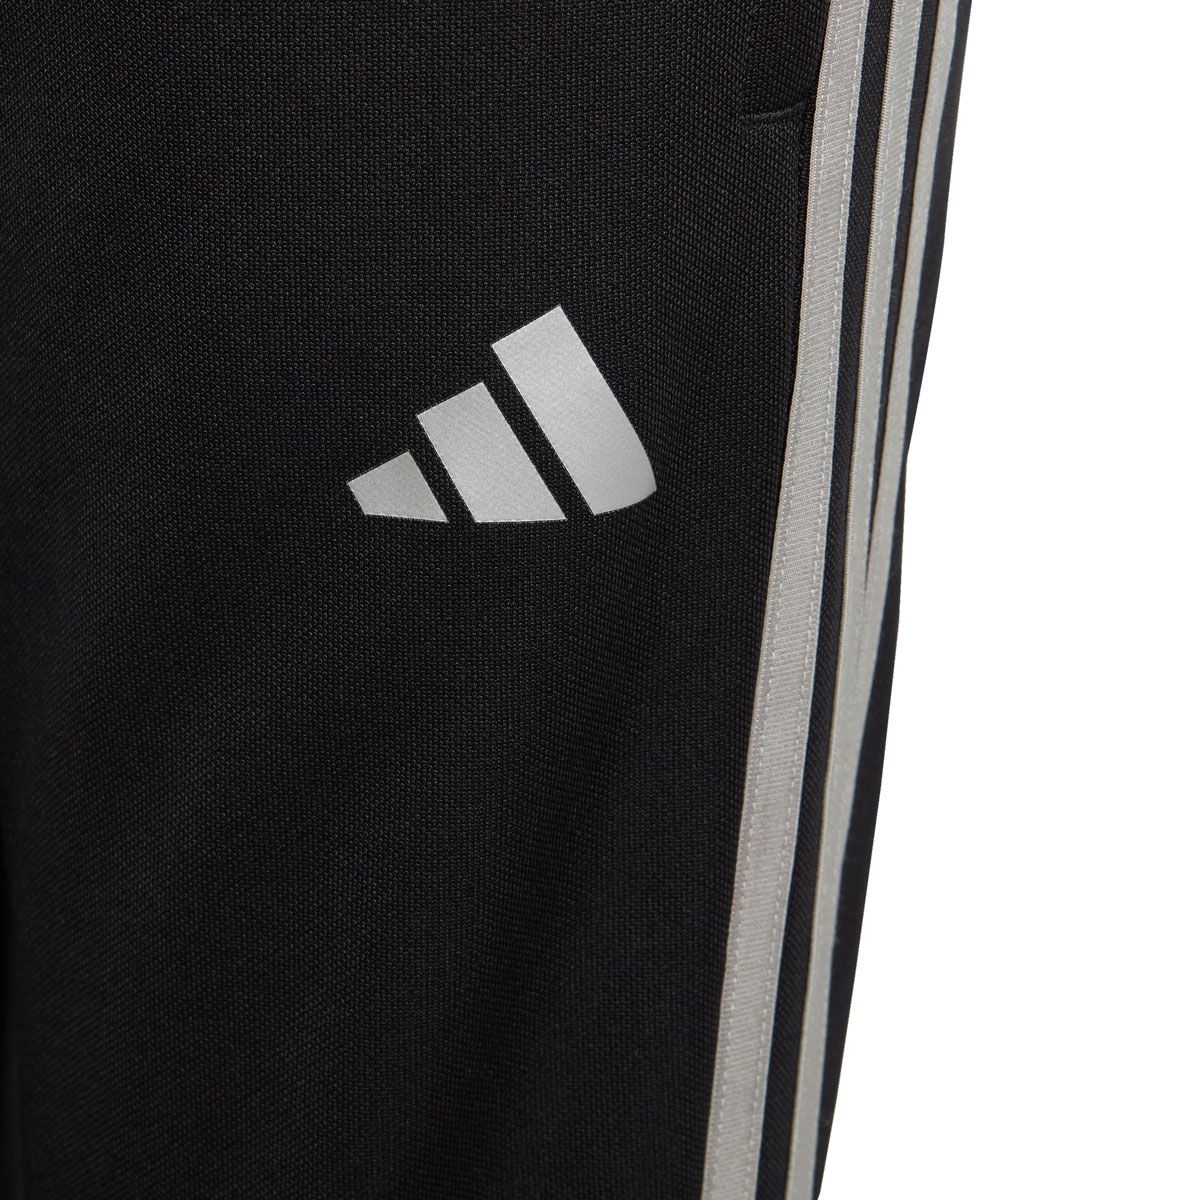 Adidas Messi Track Pants - Black - Football Shirt Culture - Latest Football  Kit News and More